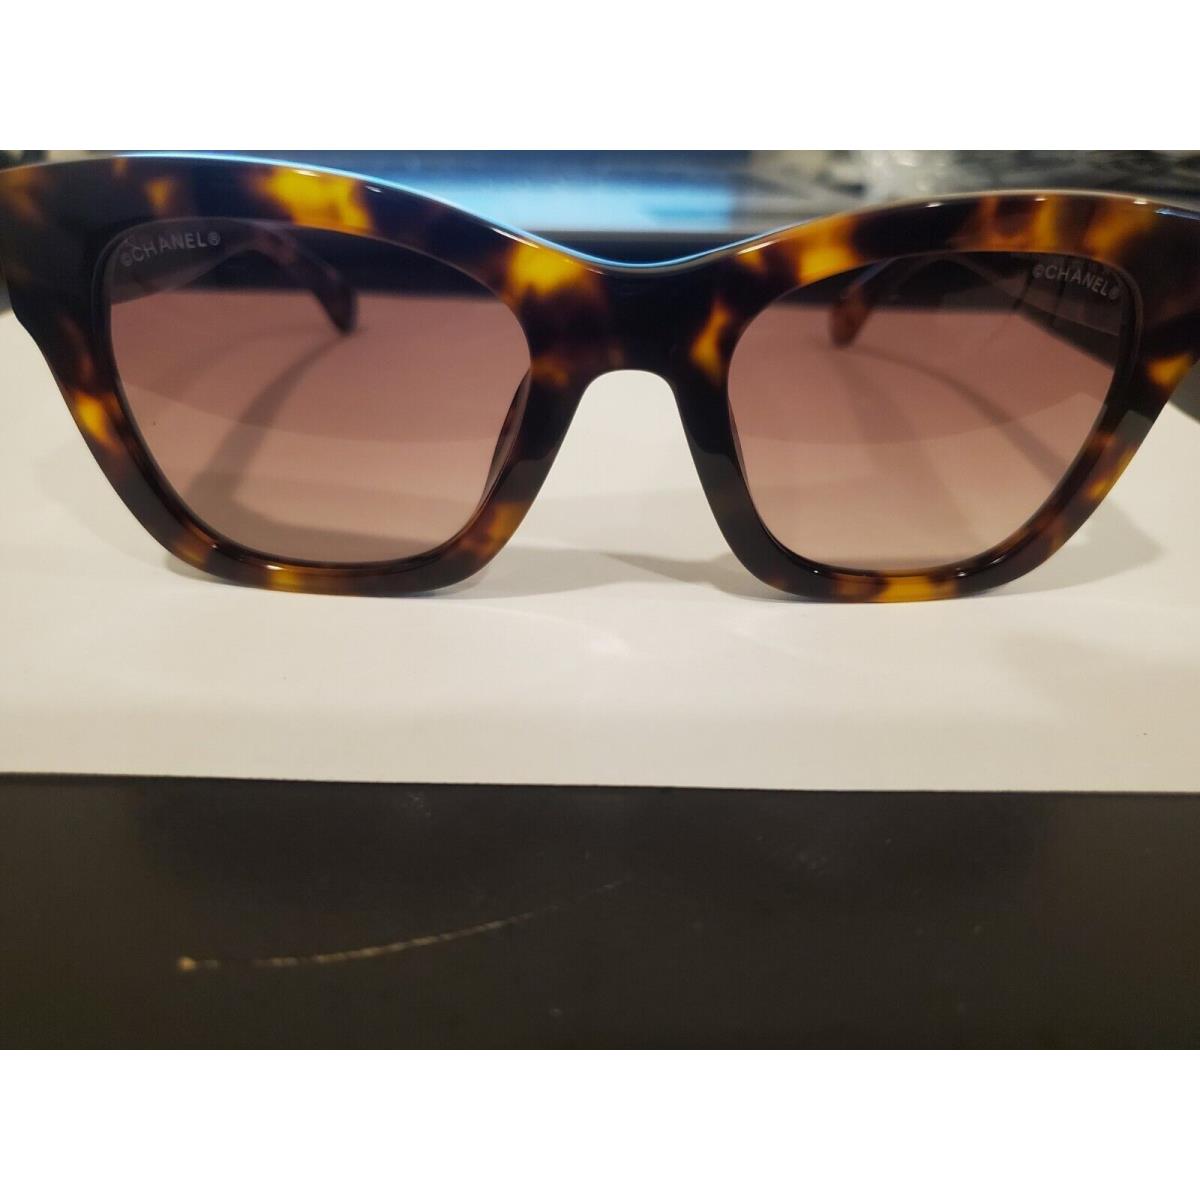 Chanel Sunglasses New Authentic 5478 c 501/S4 Black Gray Square Heart logo  ITALY